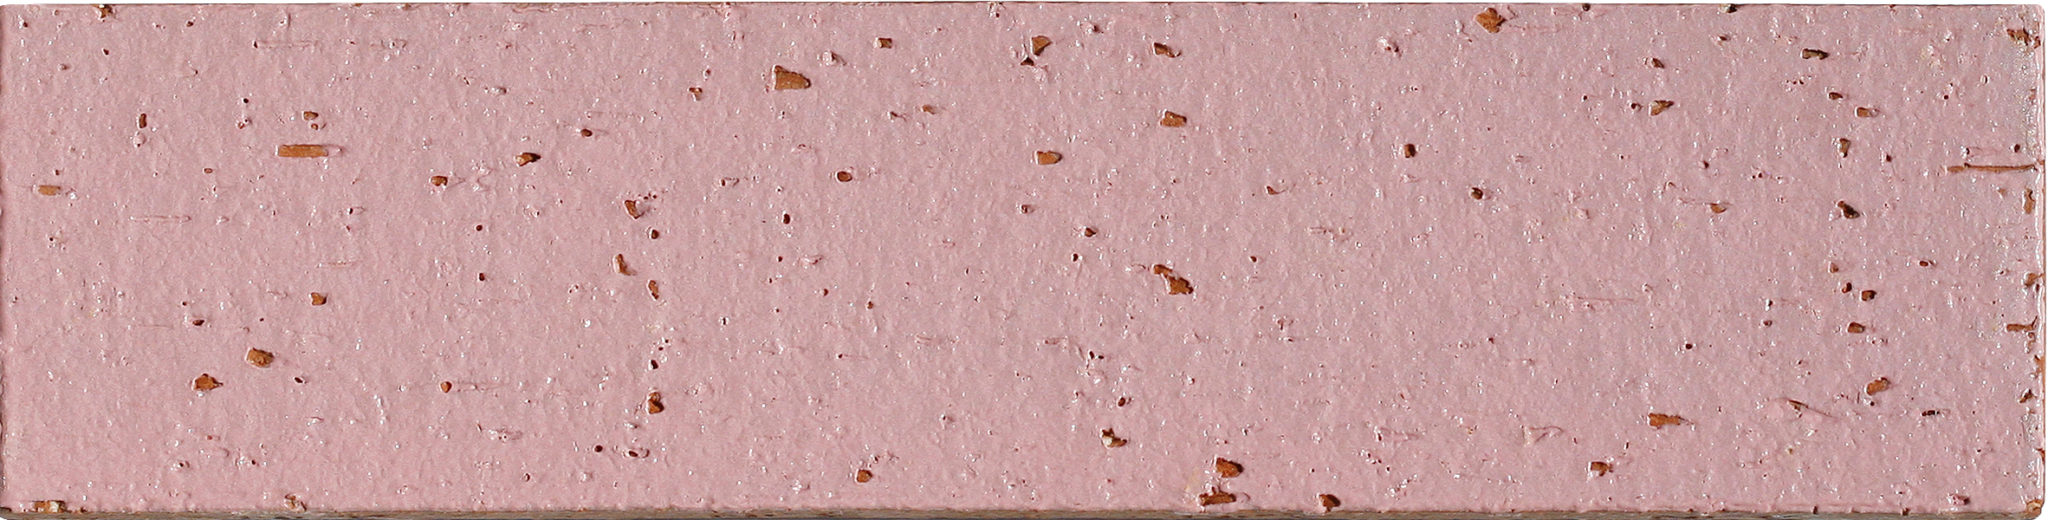 DJ - Morrocotto Pink Subway Tile